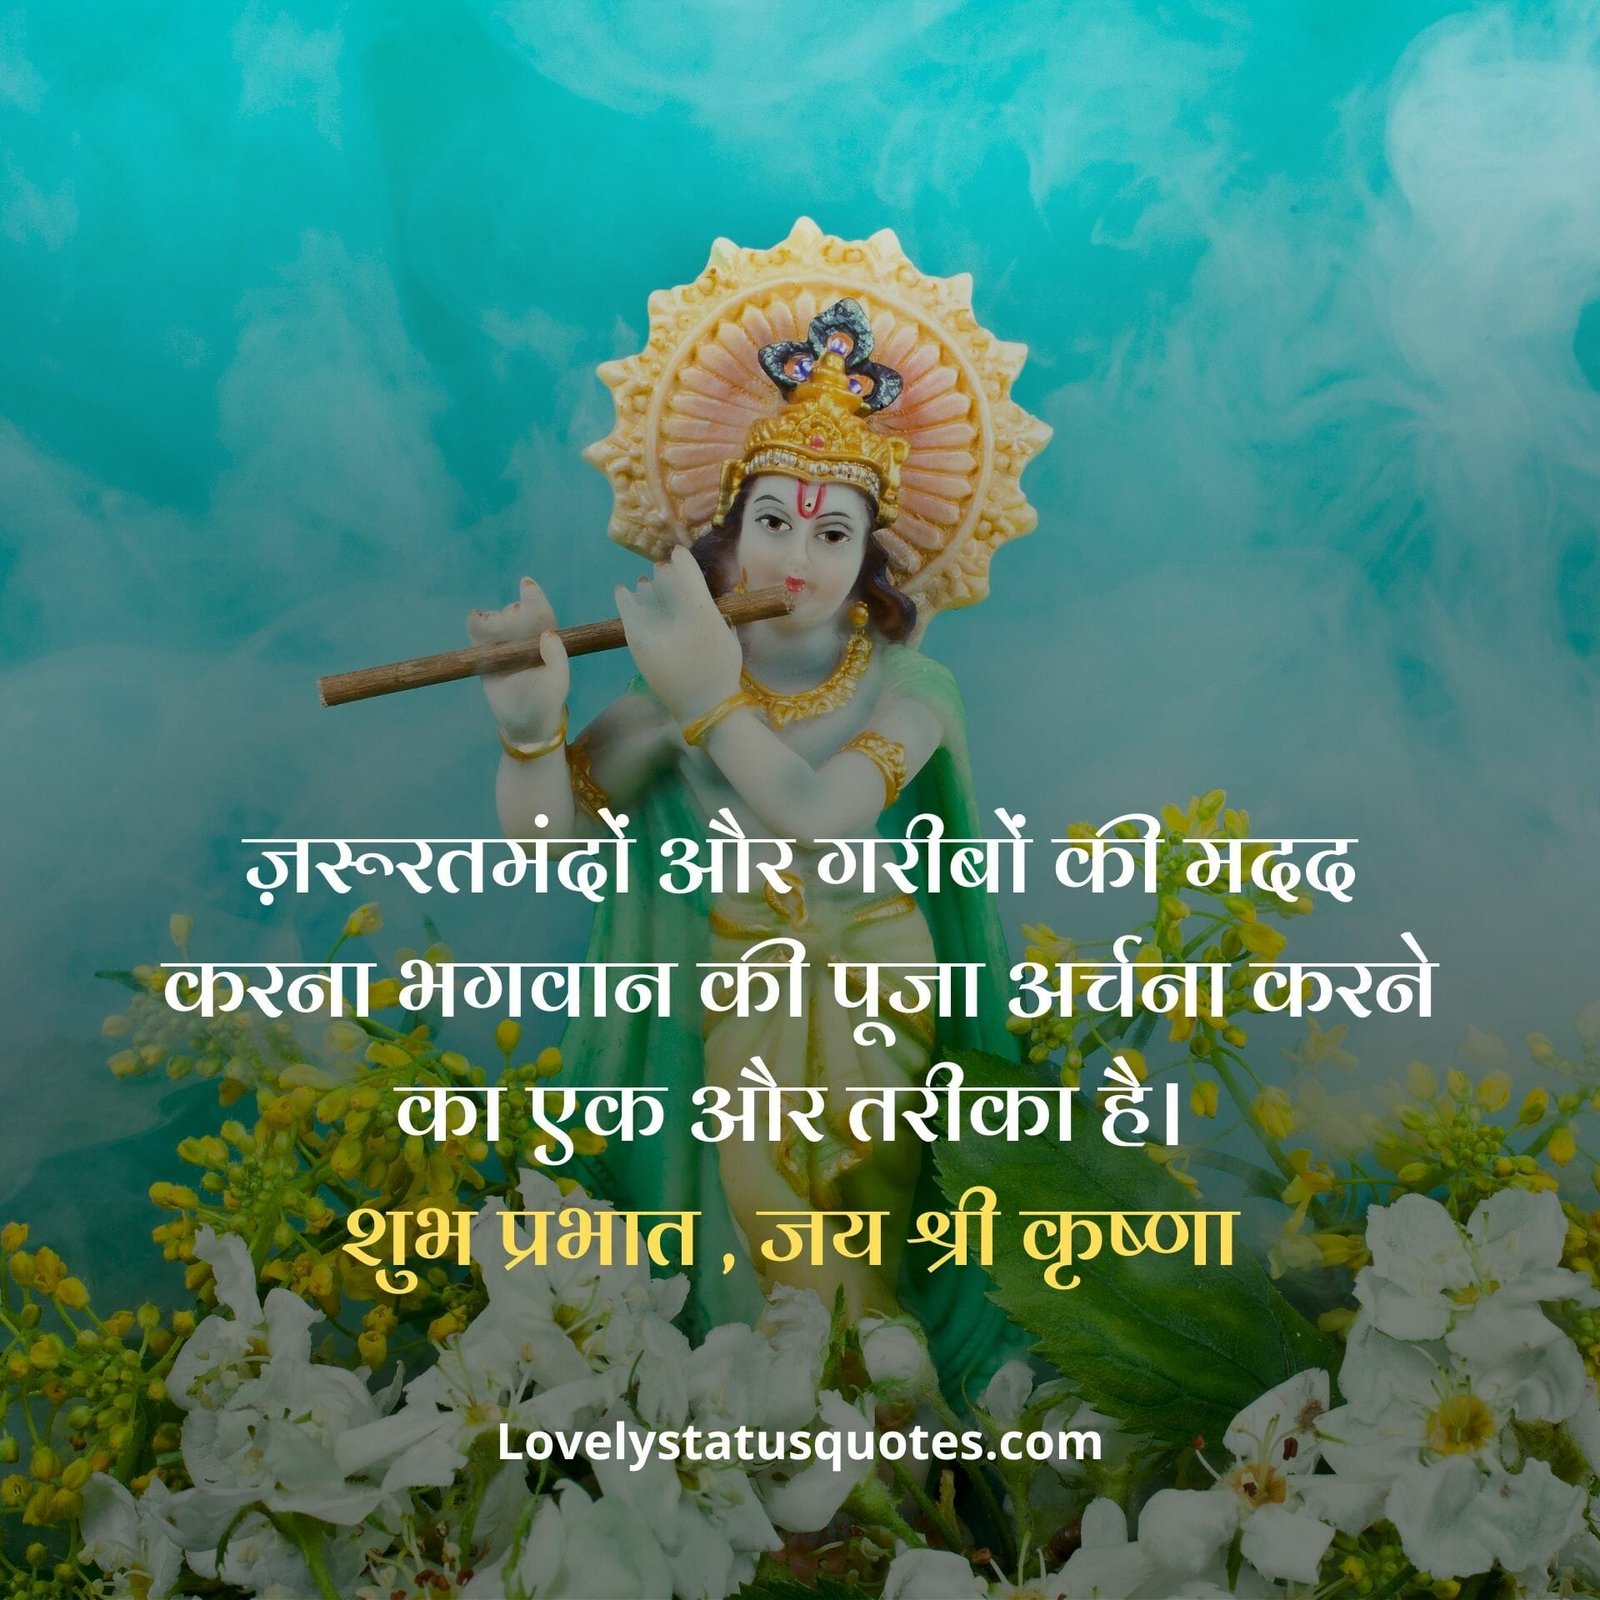 subhprabhat good morning quotes in hindi Hare krishna image